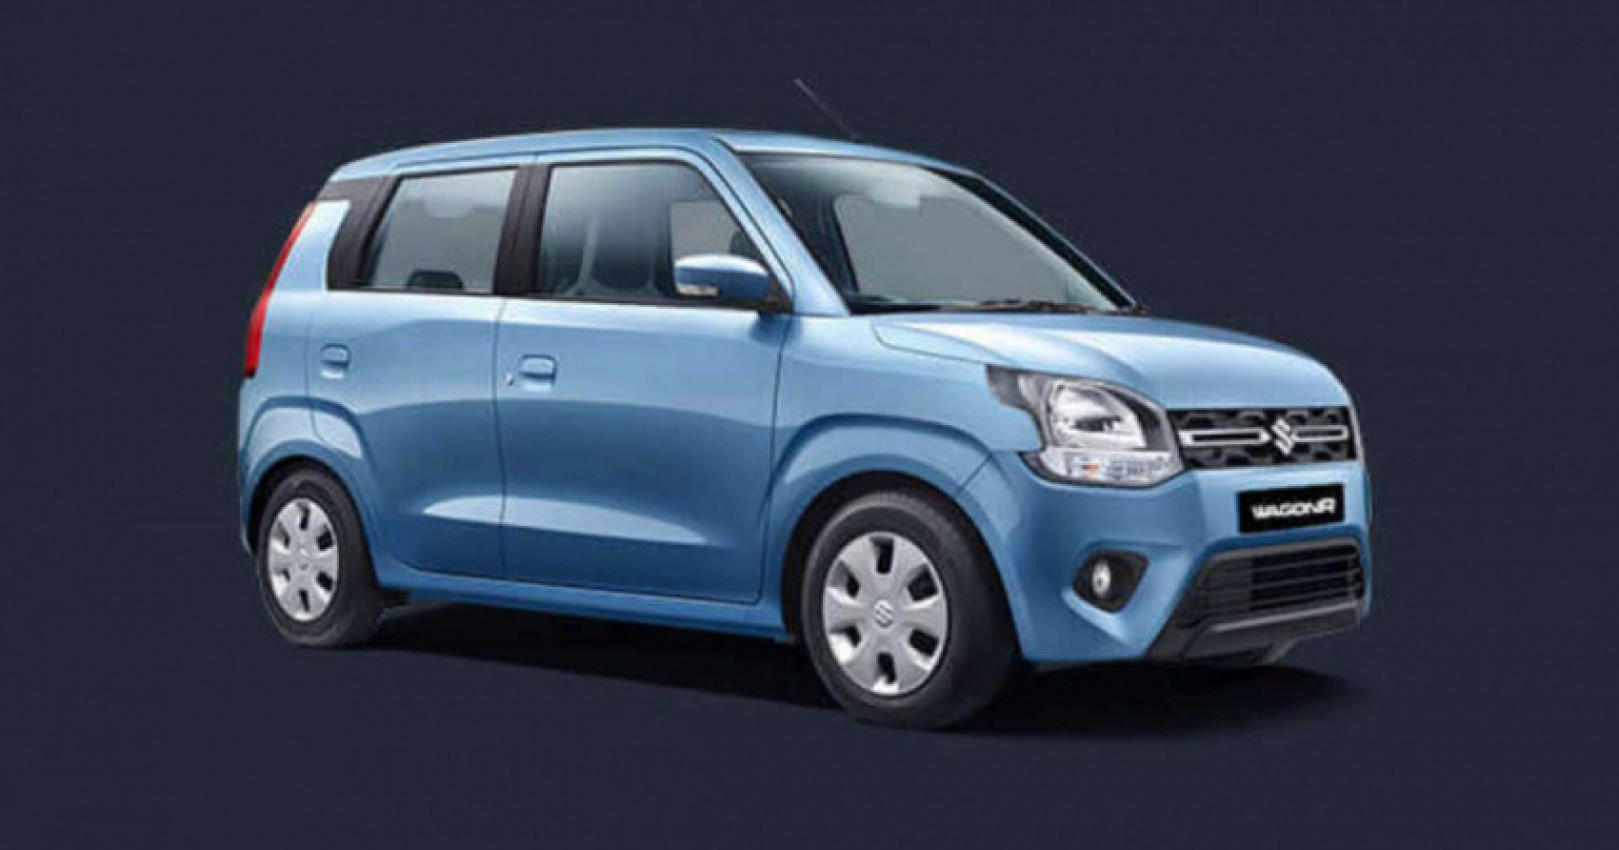 autos, cars, suzuki, maruti suzuki wagon r, swift, brezza and more get discount benefits of up to rs 38,000